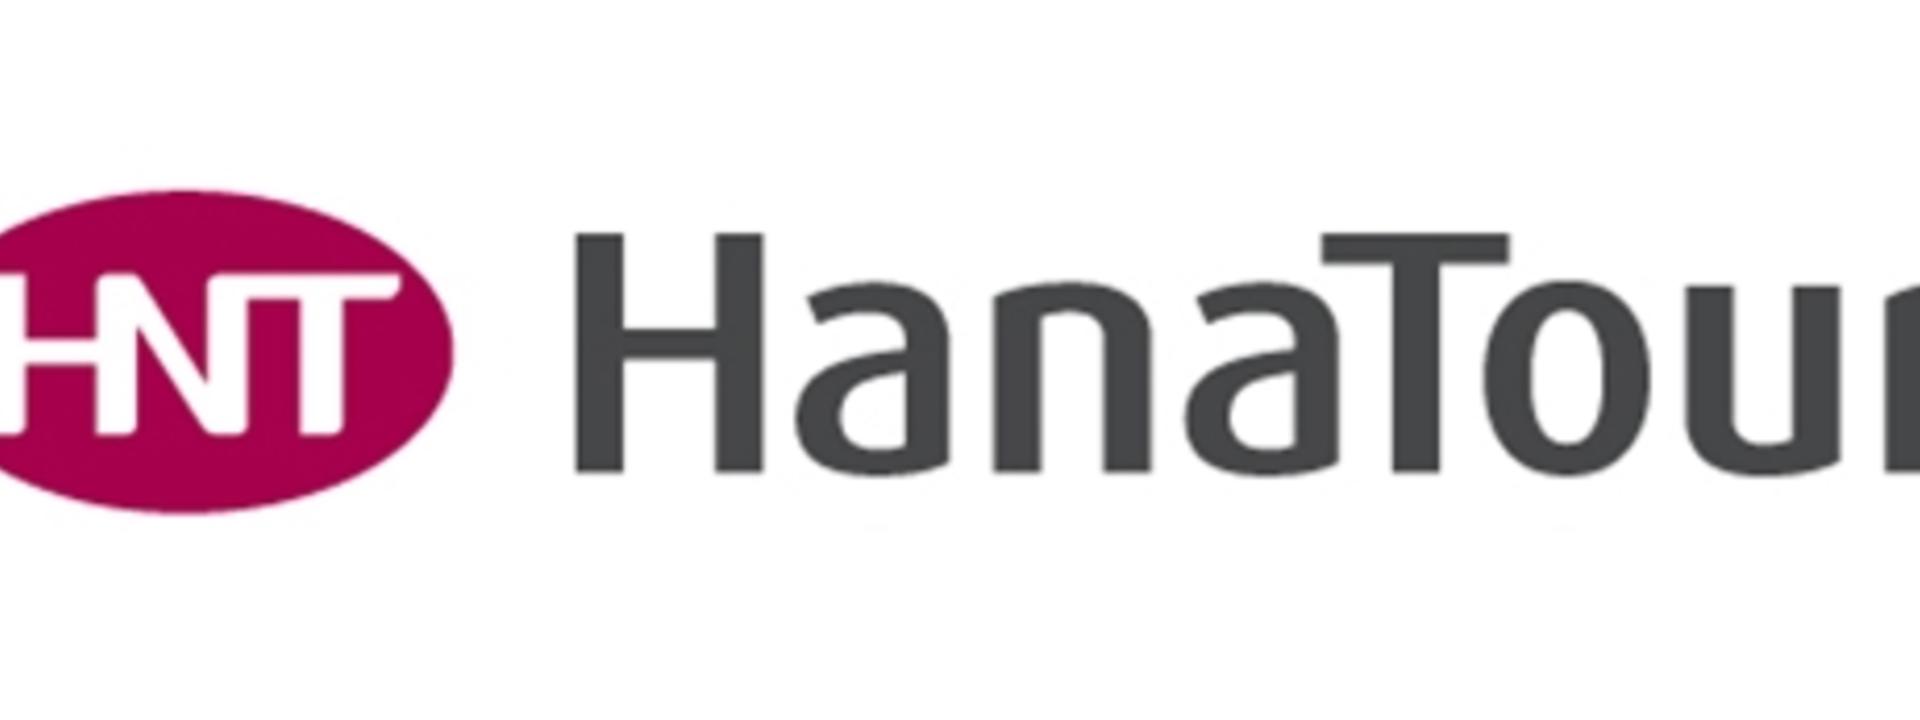 hana tour travel agency